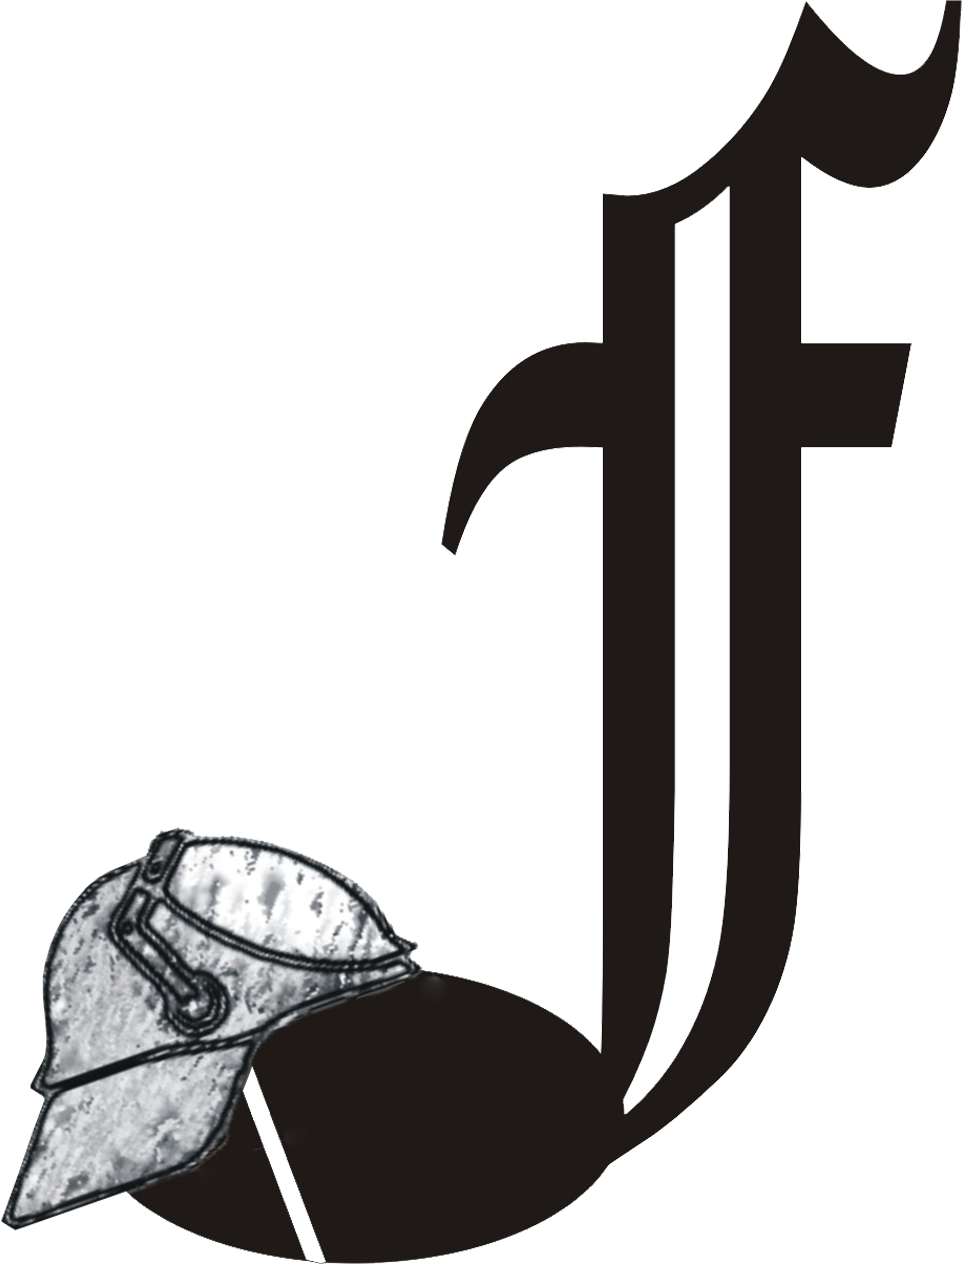 Logo Kapelle